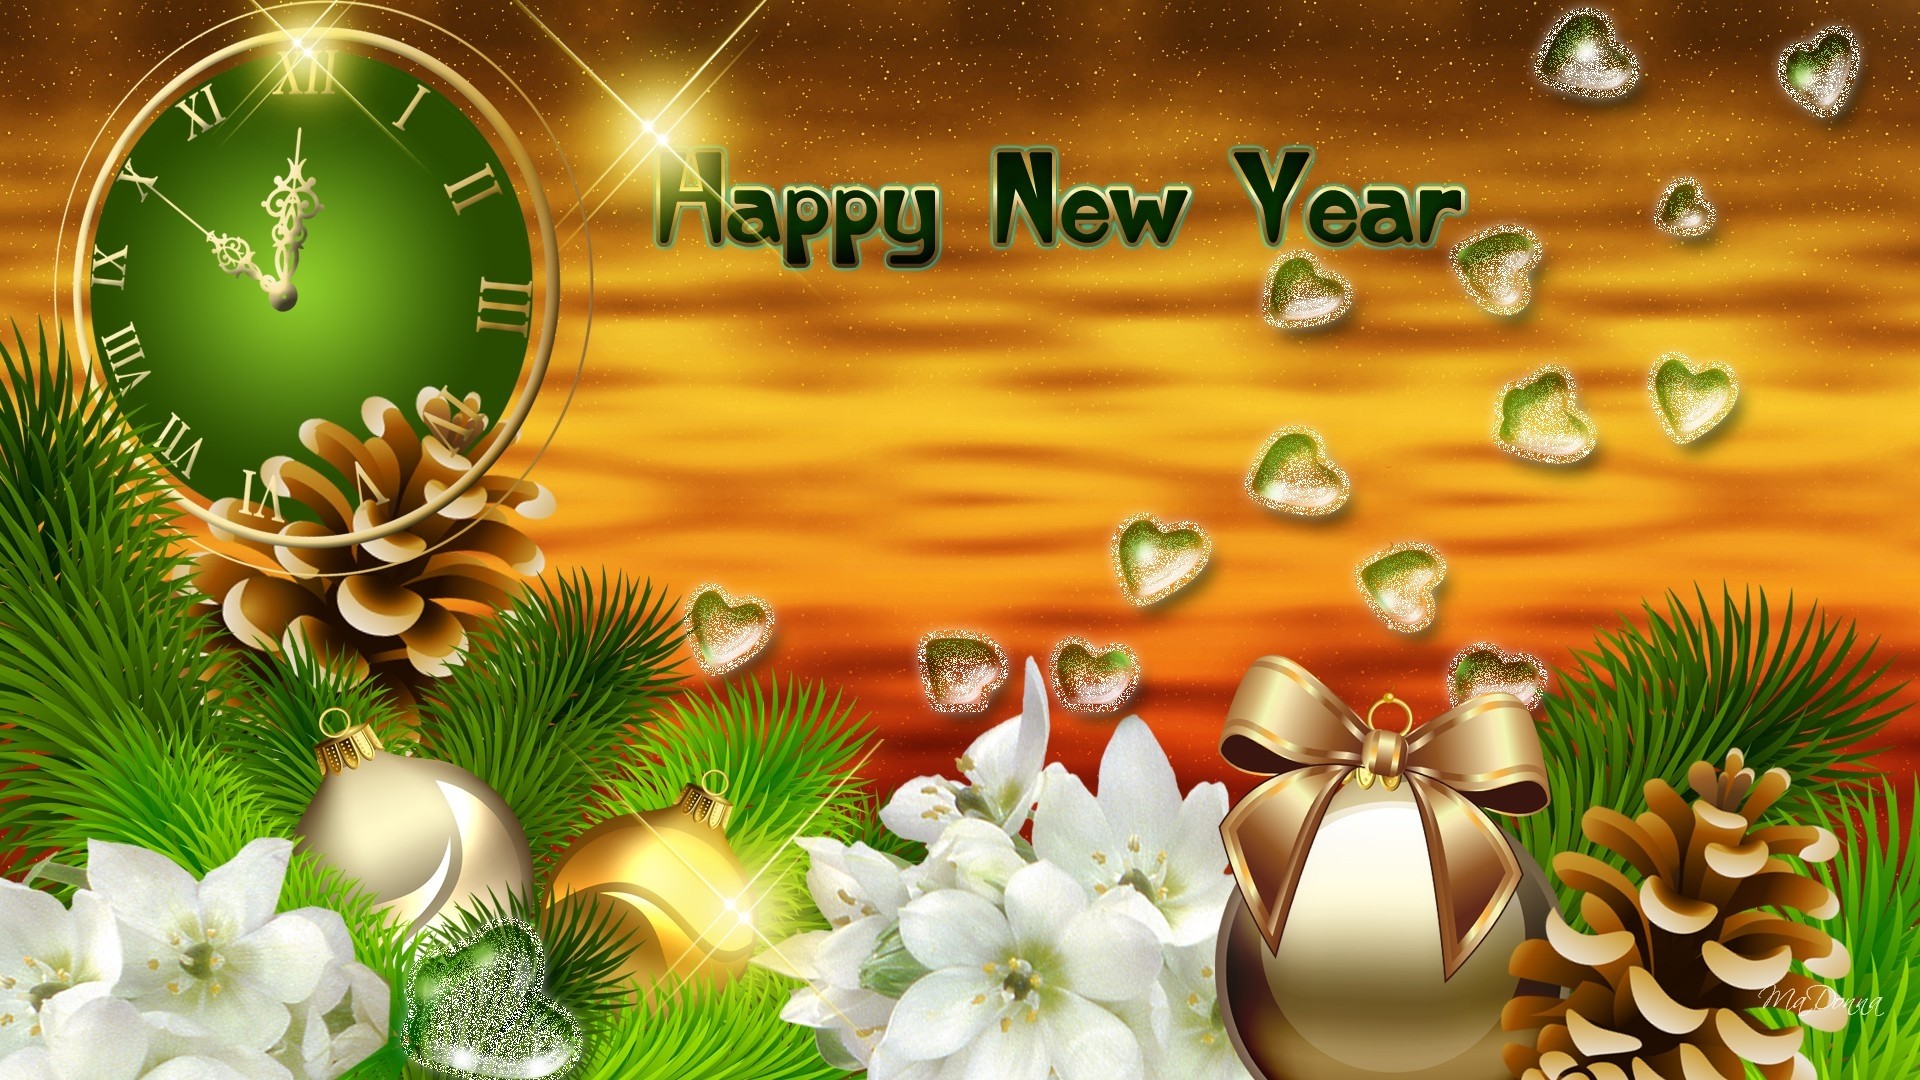 1920x1080 Happy New Year 2014 HD Wallpaper - New Year Widescreen HD .